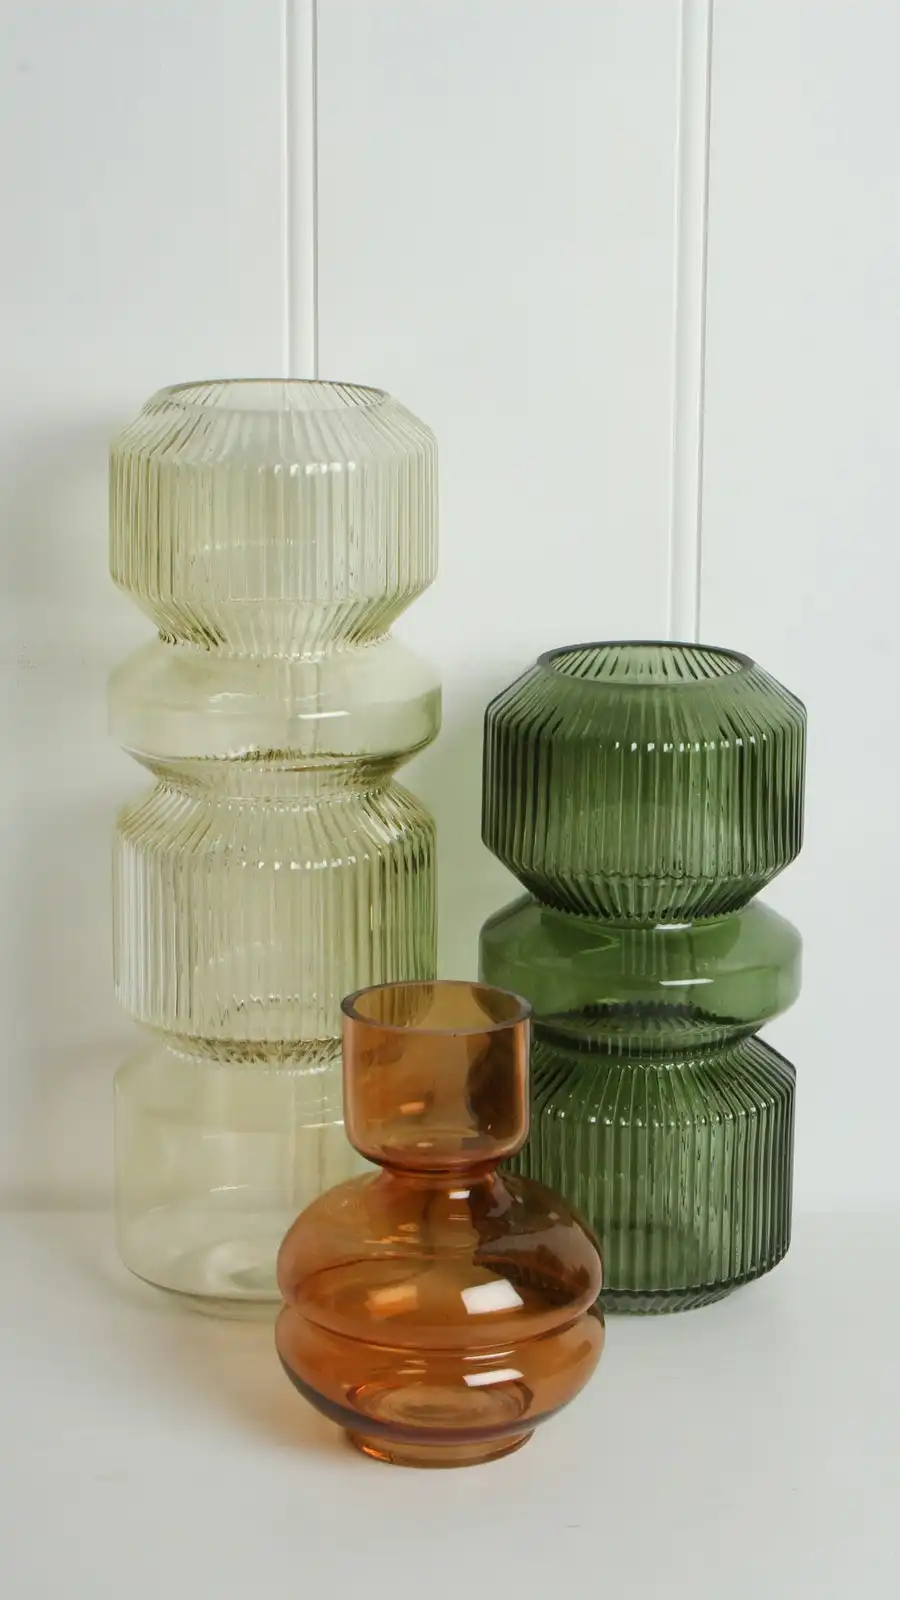 Maine & Crawford 35x13cm Bibo Ribbed Glass Cylinder Vase Home/Garden Display